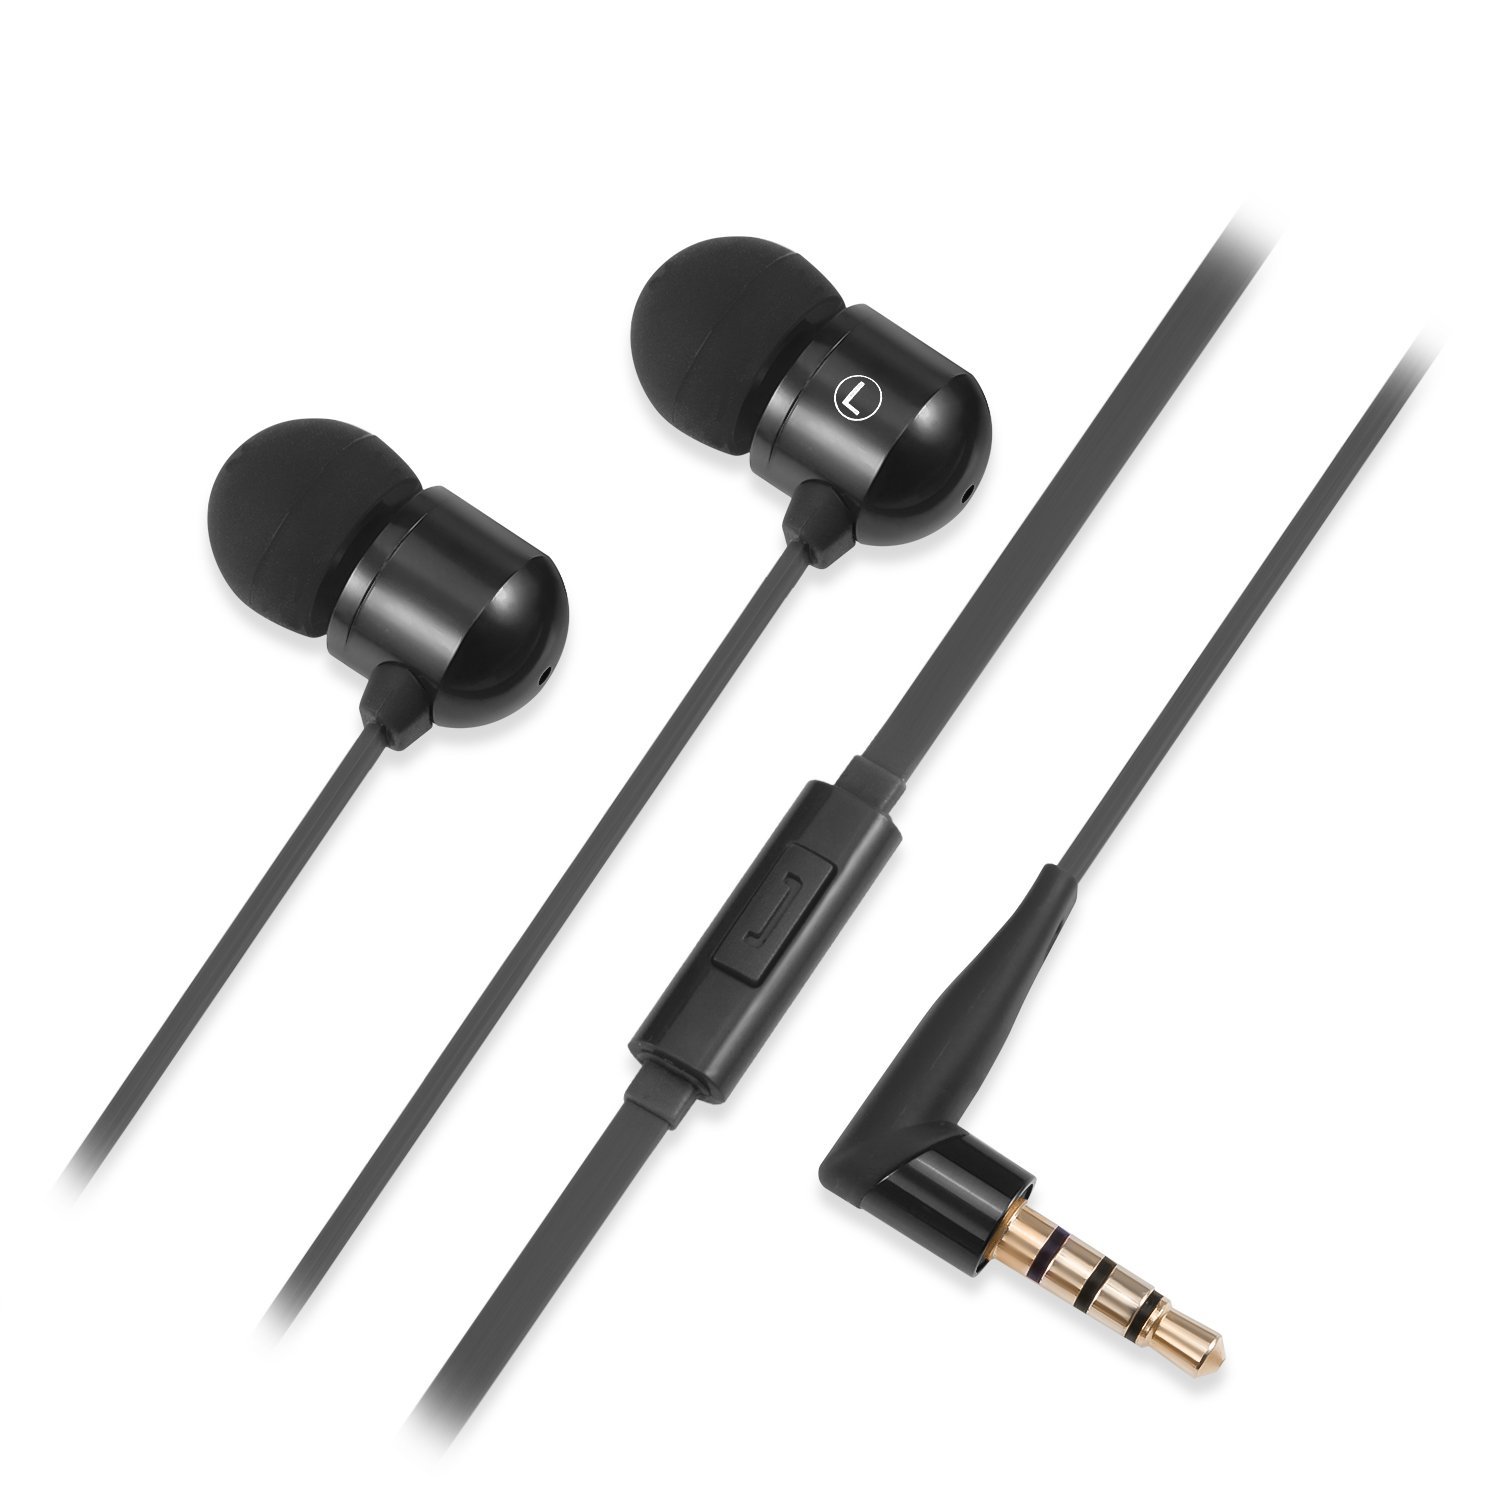  High quality new design metal in-ear headphone  